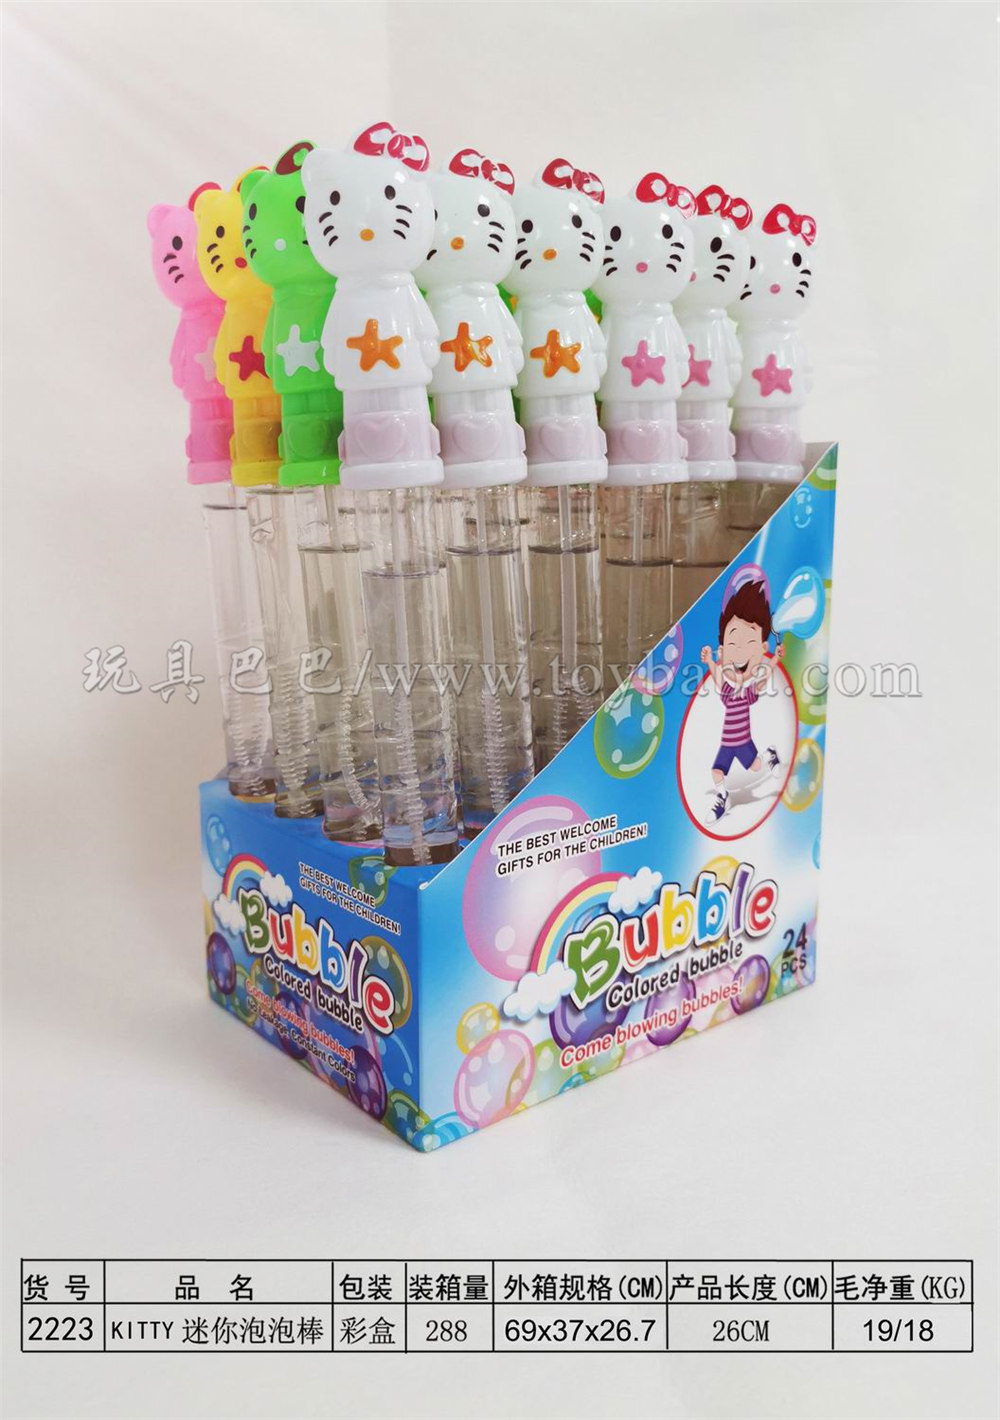 26cm Kitty bubble stick 24pcs / box (4 colors)